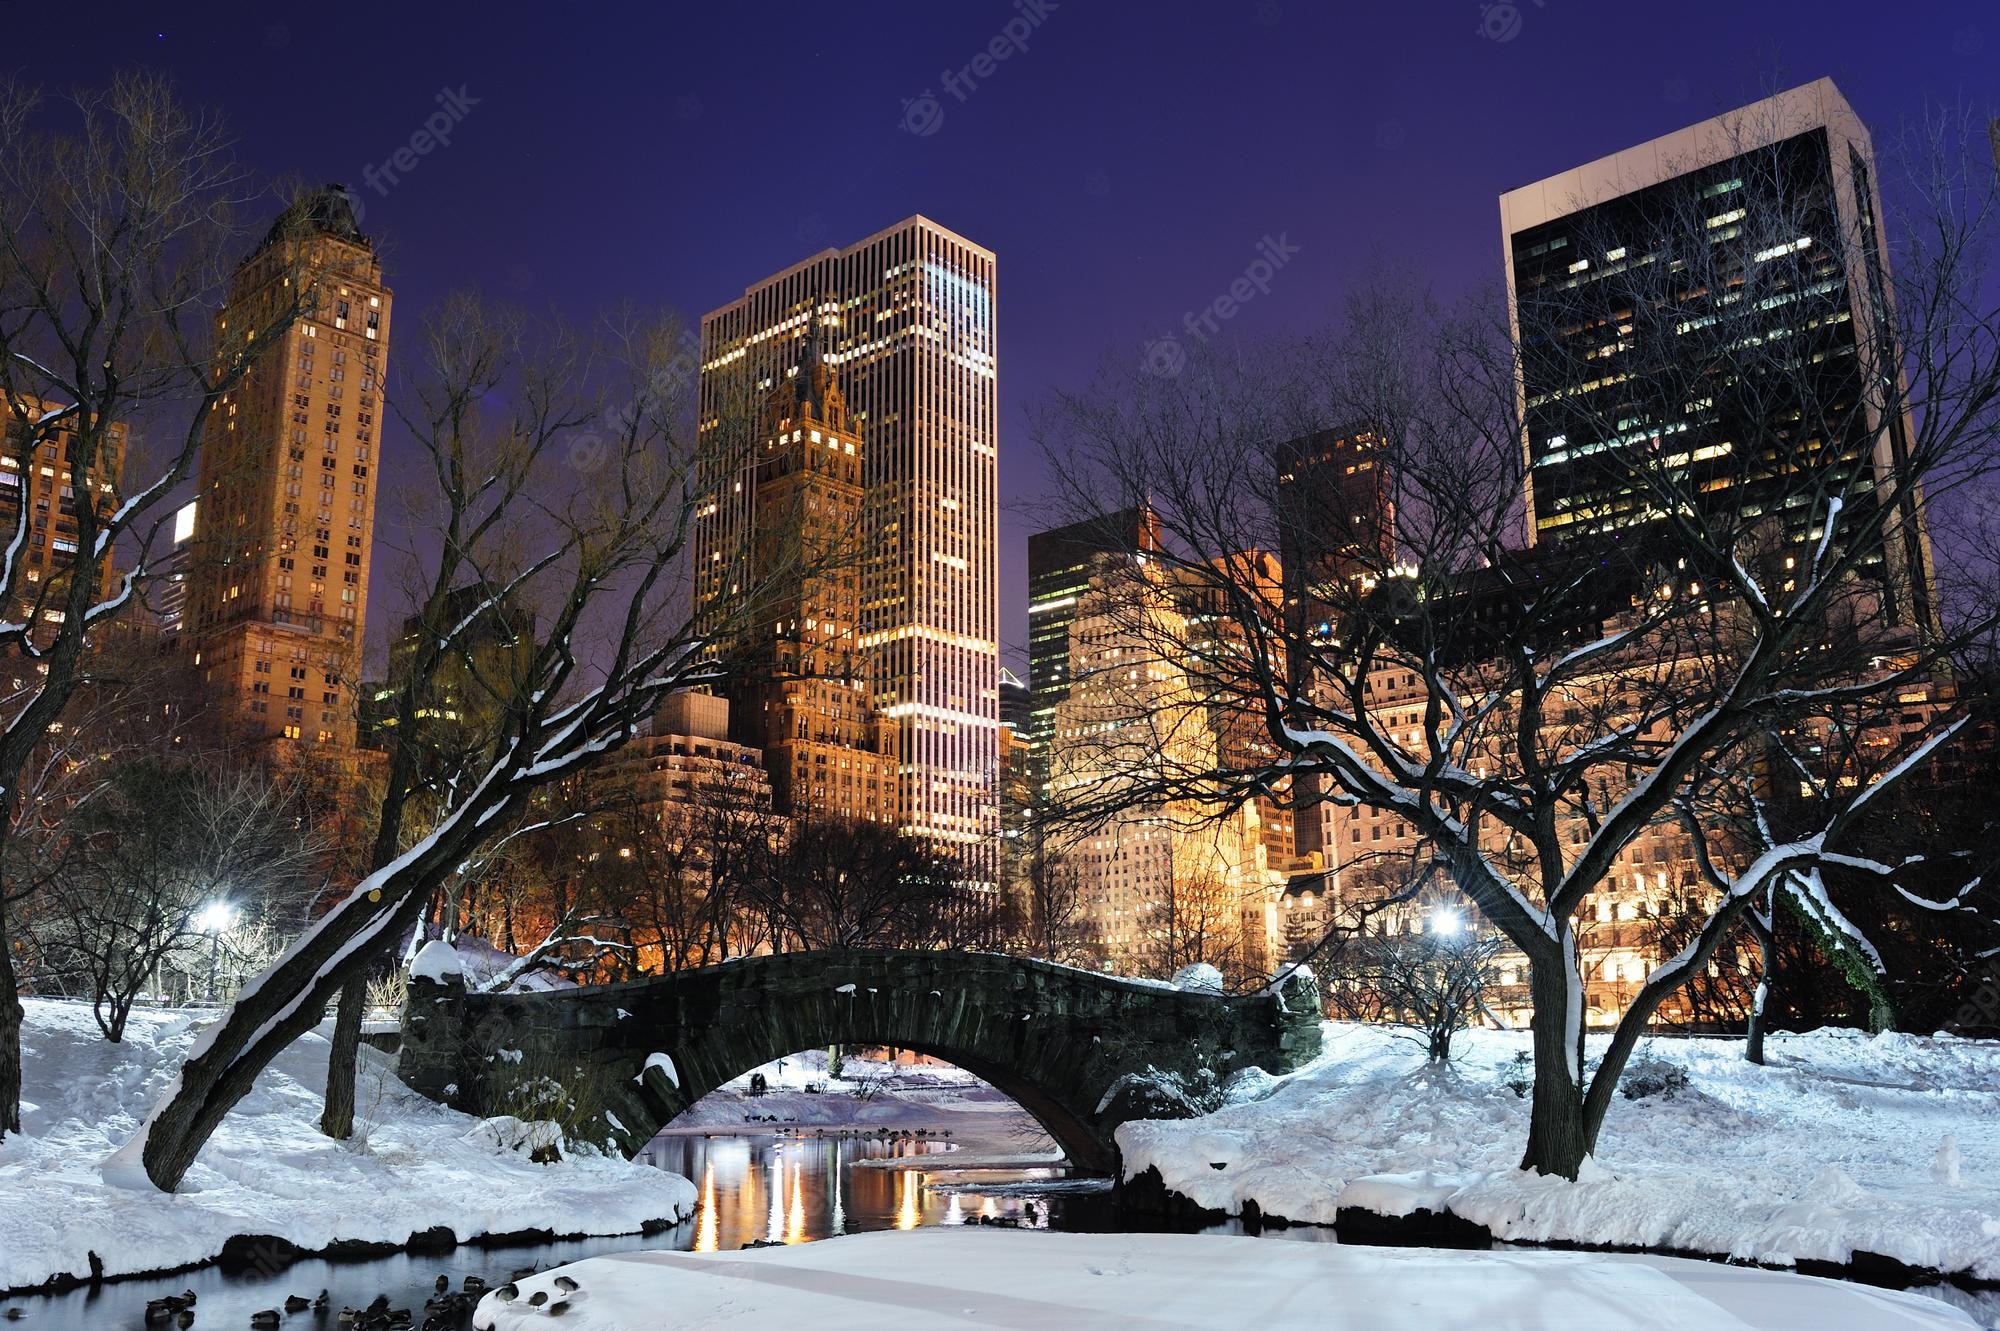 New york winter Image. Free Vectors, & PSD